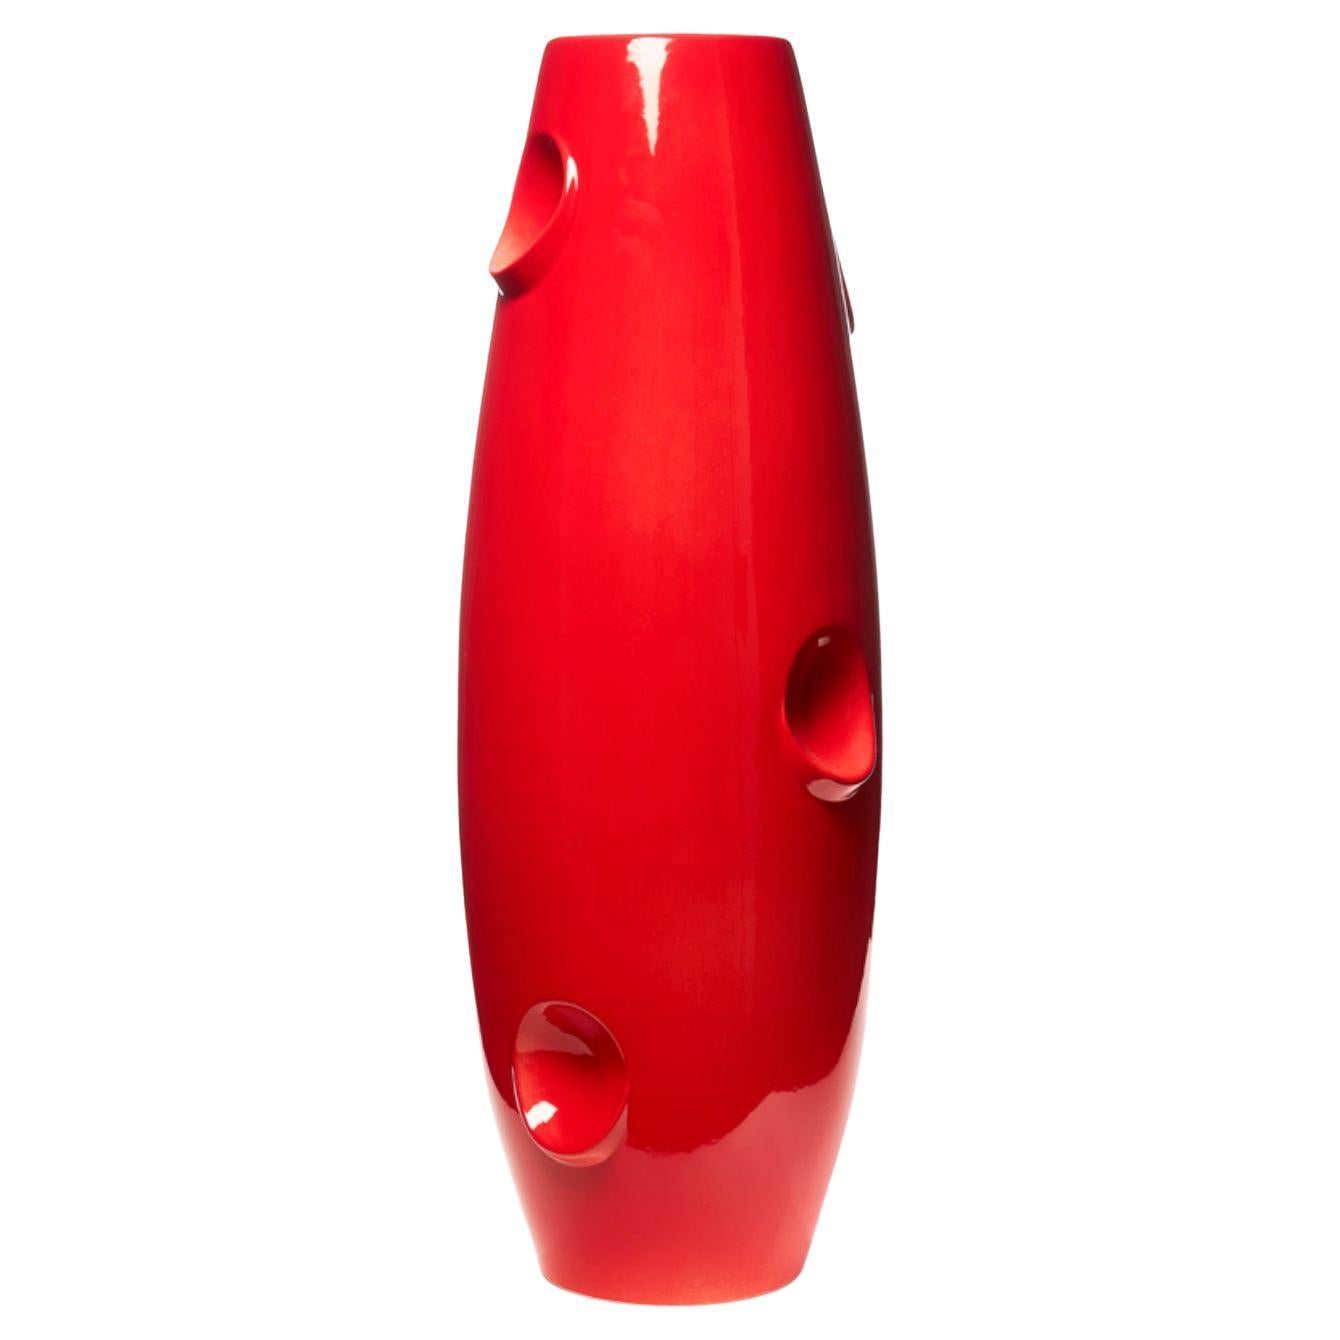 Teresa / Red Vase by Malwina Konopacka